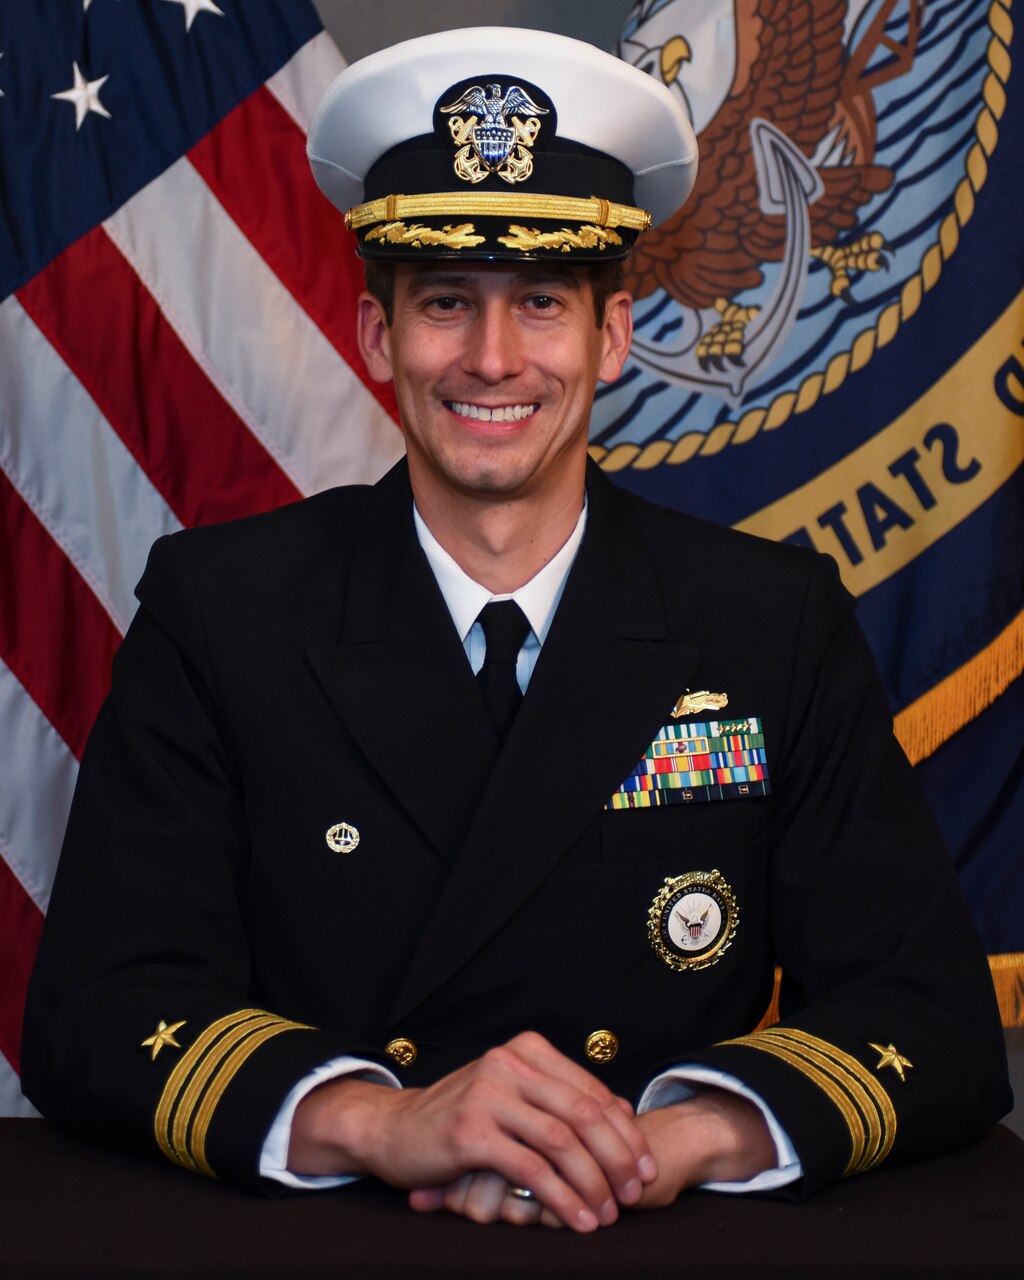 Commander Erik E. Moss